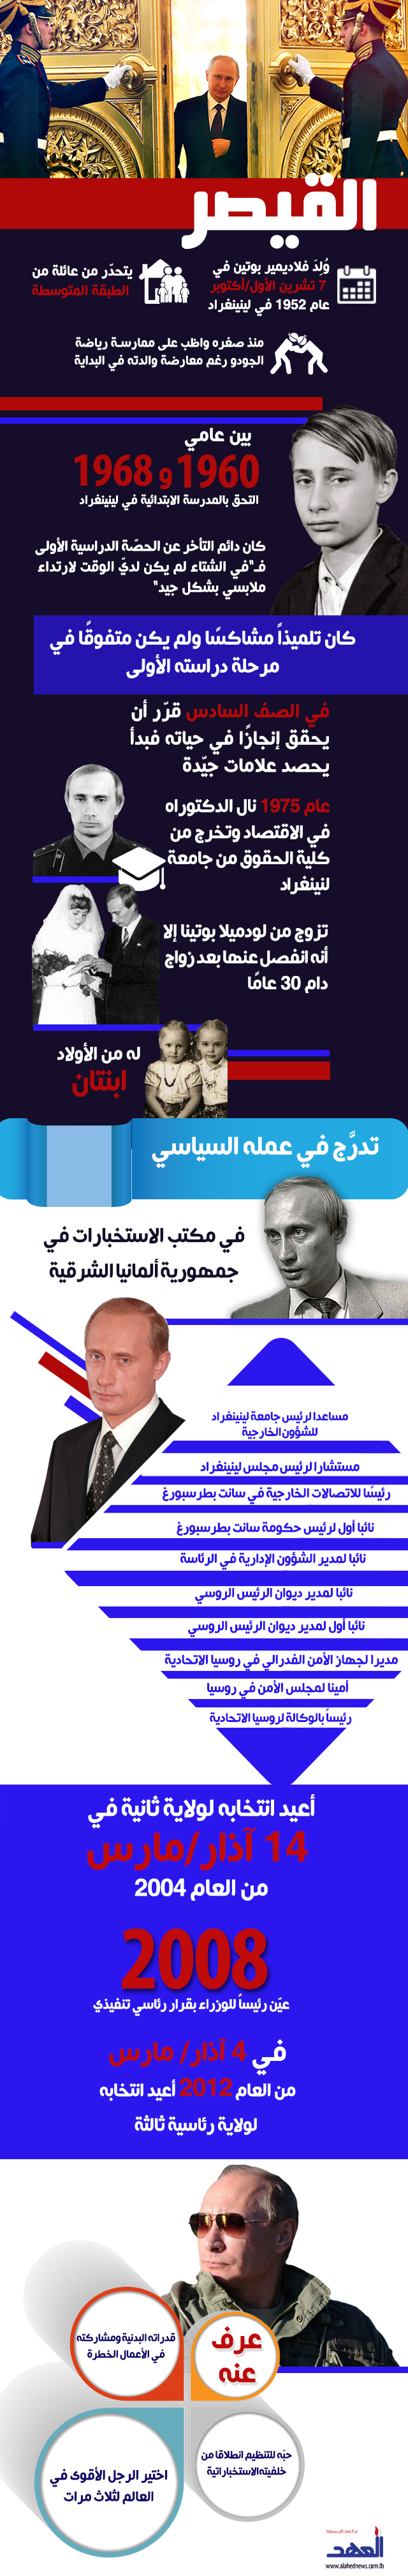 فلادمير بوتين